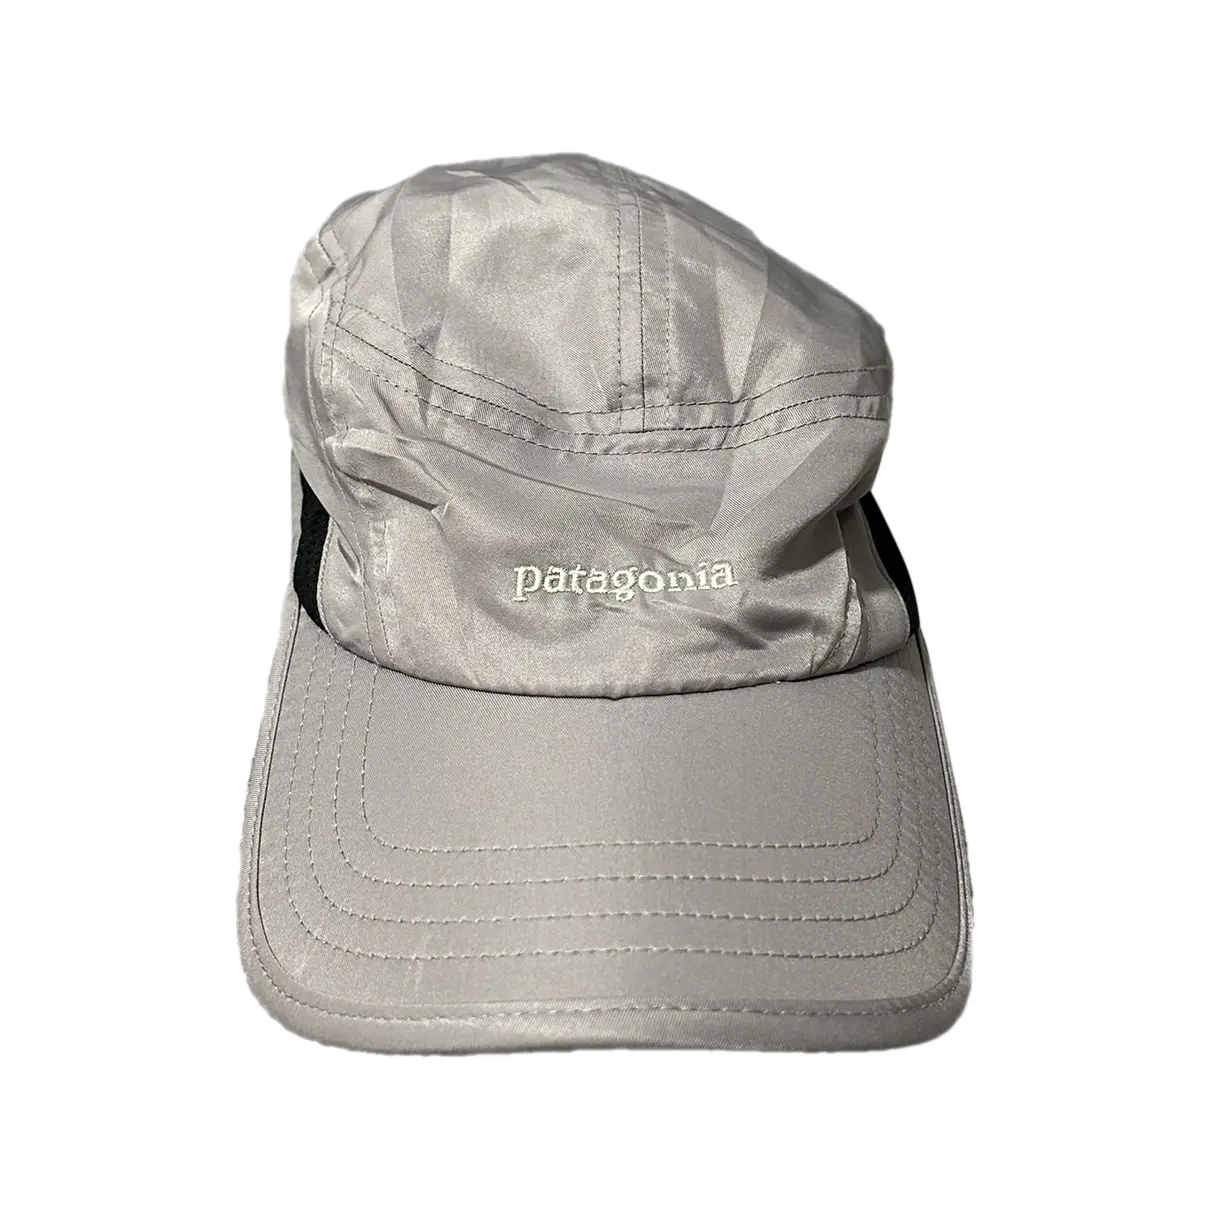 Hat Patagonia Grey size M International in Polyester - 42592076